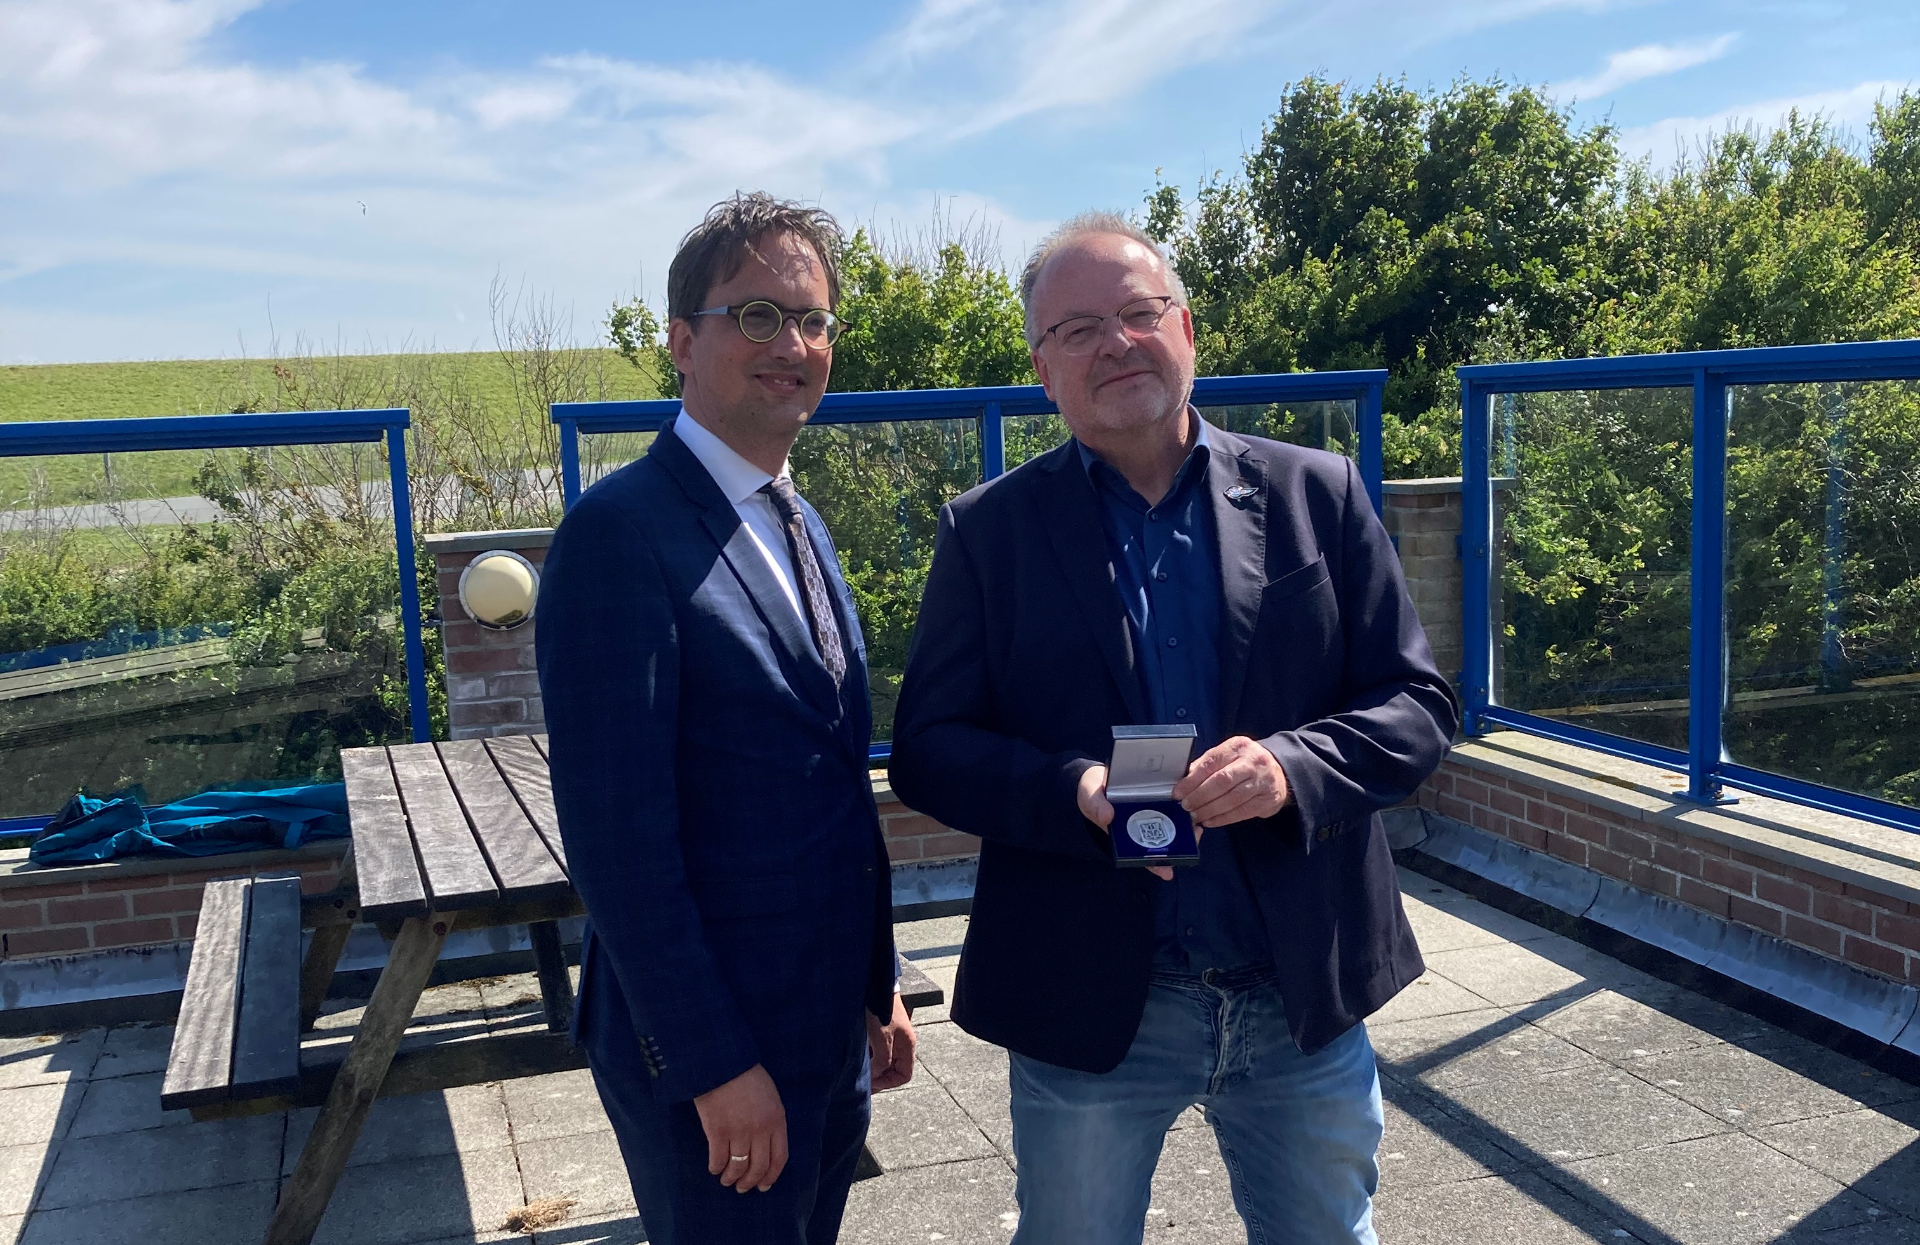 Mayor ot Texel, Michiel Uitdehaag with Henk Brinkhuis. Photo: NIOZ